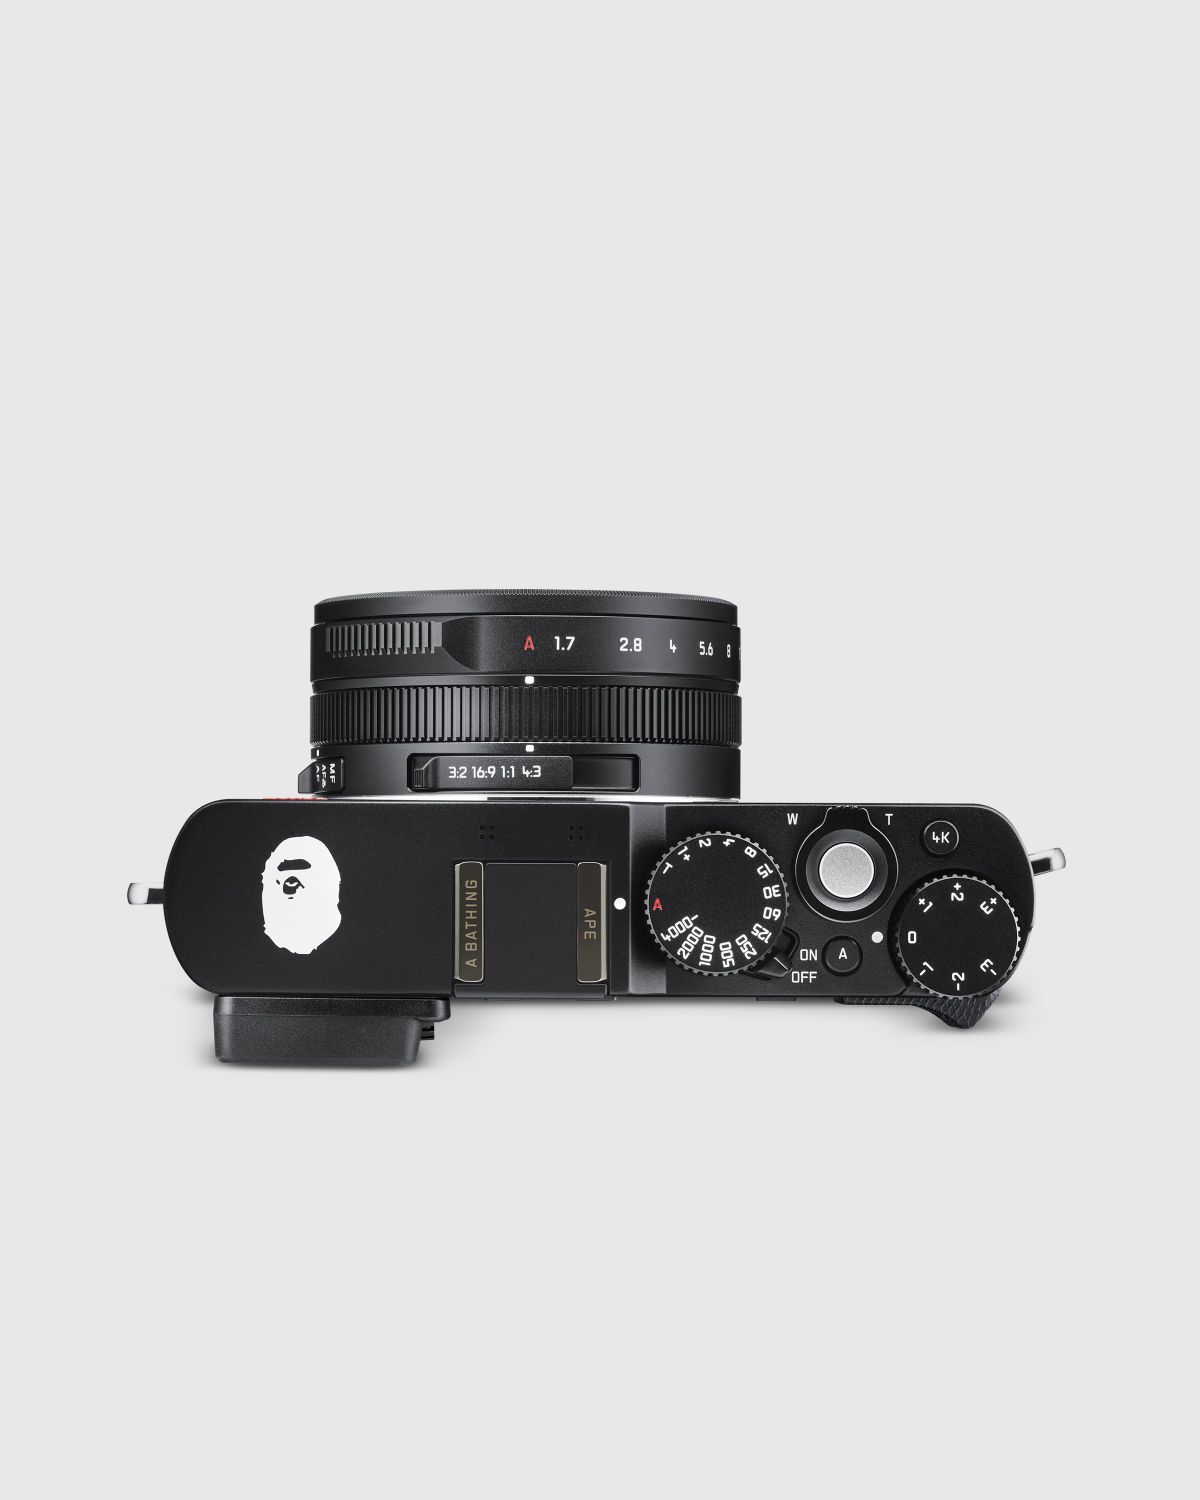 Leica – D-Lux 7 “A BATHING APE® x STASH” Edition Black - Cameras & Accessories - Multi - Image 4